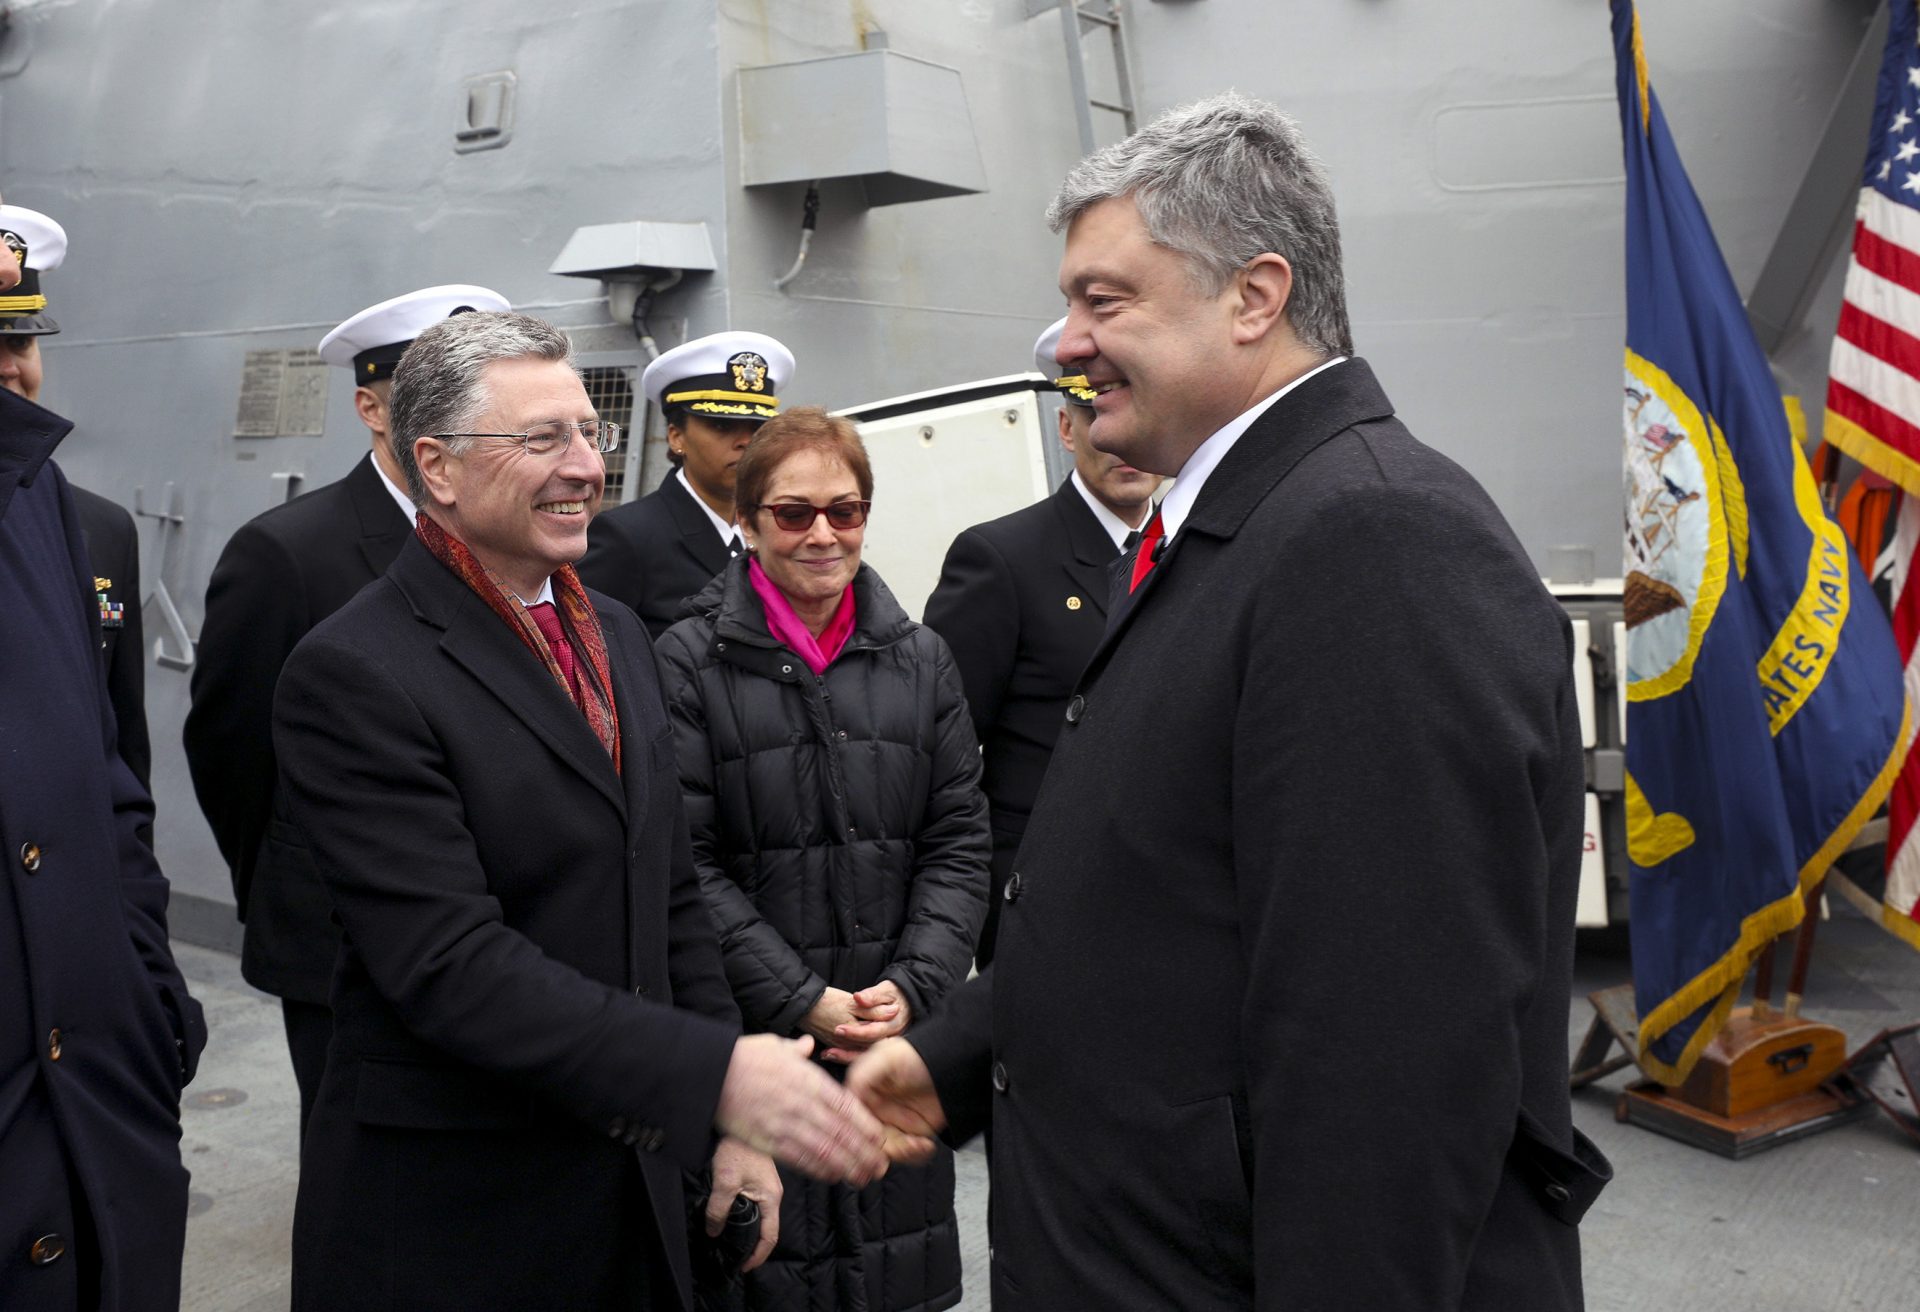 Ukraine's President Petro Poroshenko, right, shakes hands with US Special Representative for Ukraine Kurt Volker as he visited the US Navy destroyer Donald Cook in Odessa, Ukraine, Tuesday, Feb. 26, 2019.